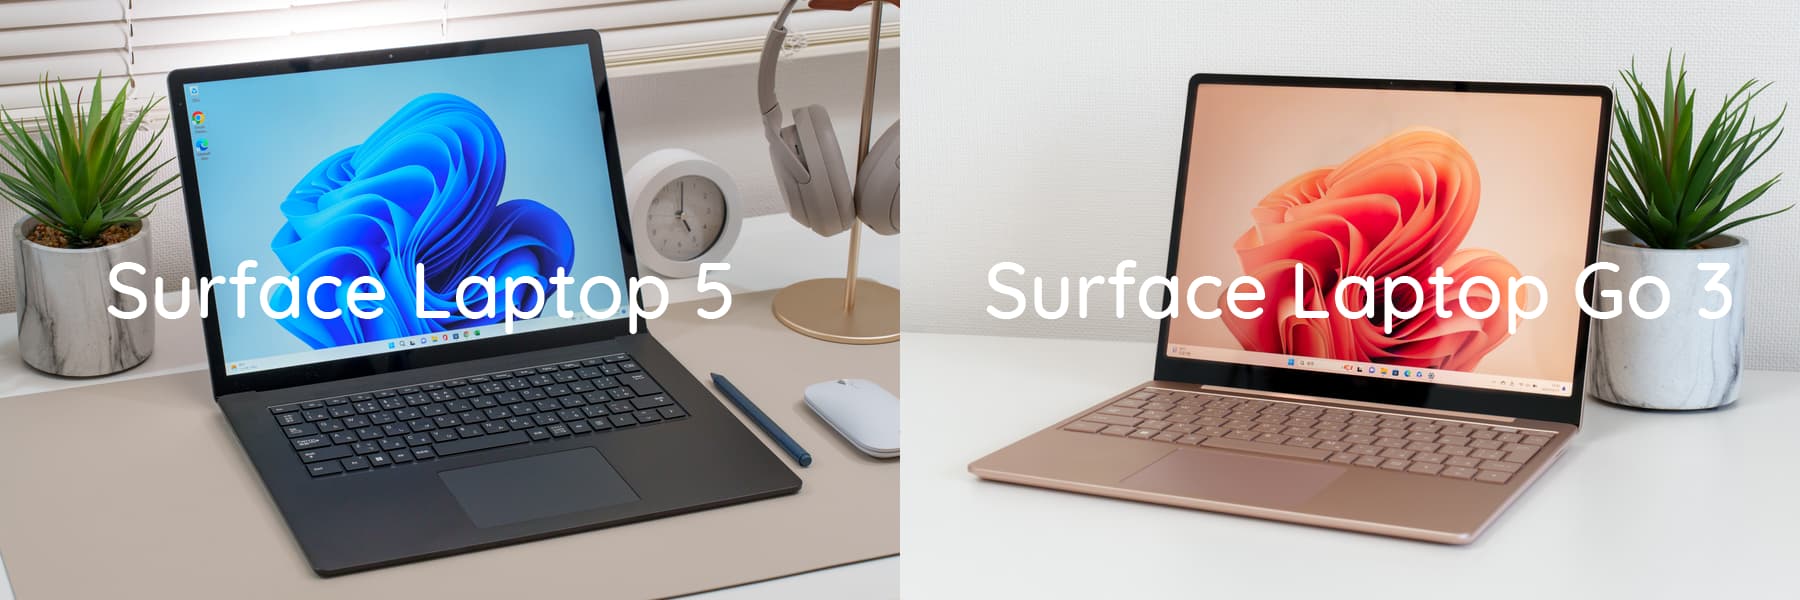 Surface Laptop 5 と Surface Laptop Go 3